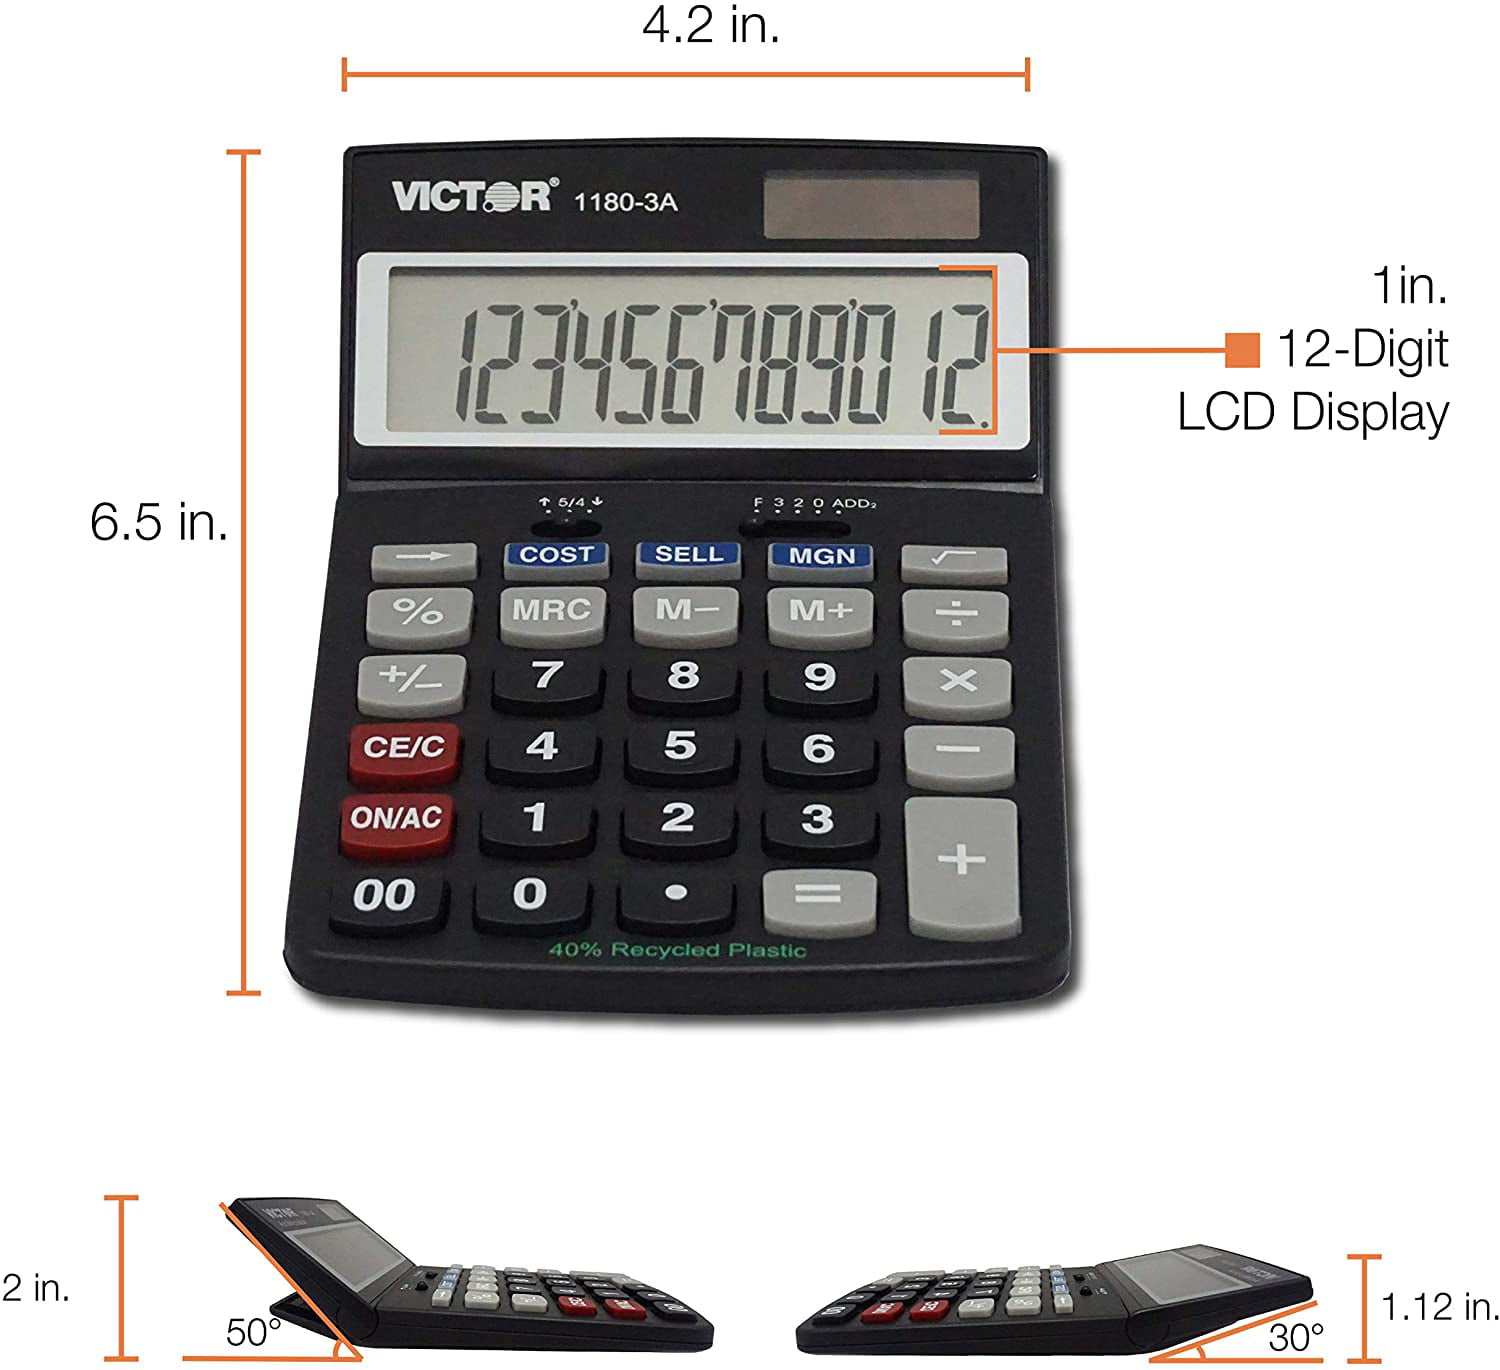 Victor 1180-3A Basic Calculator 